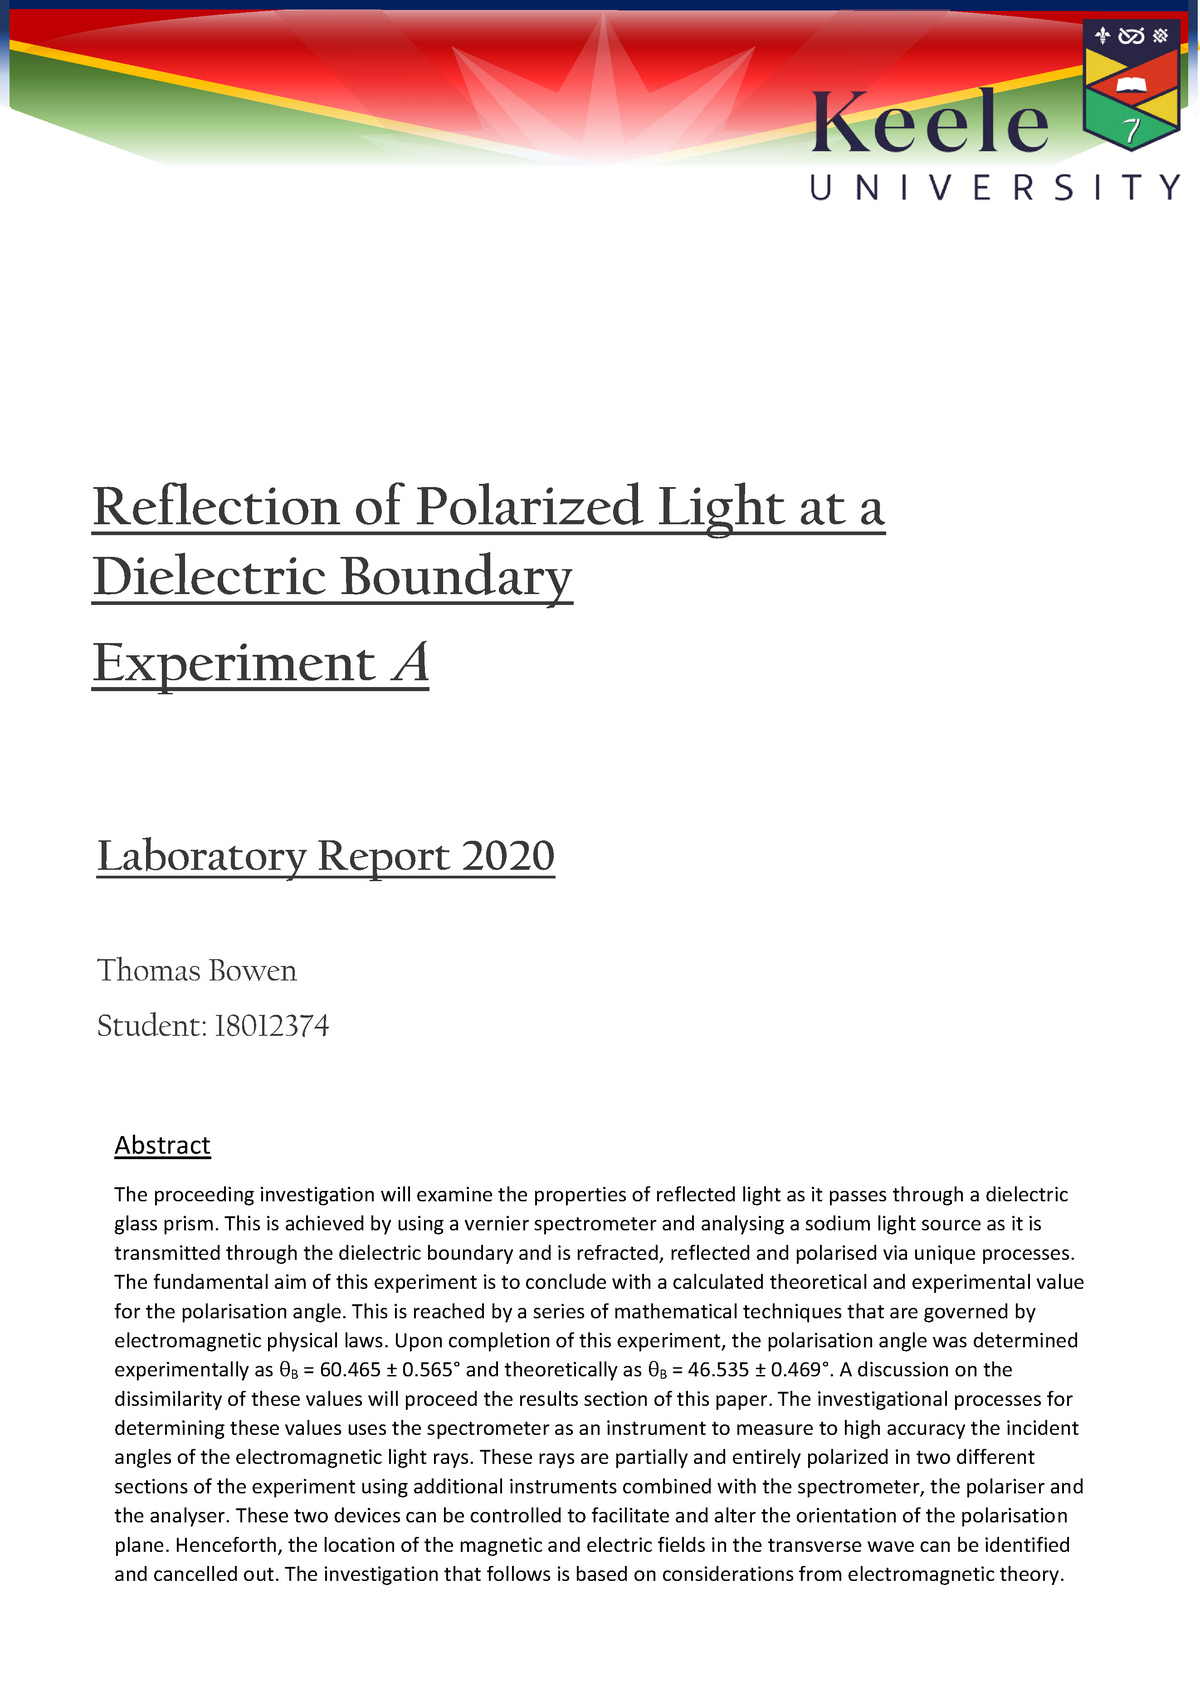 polarization of light lab report